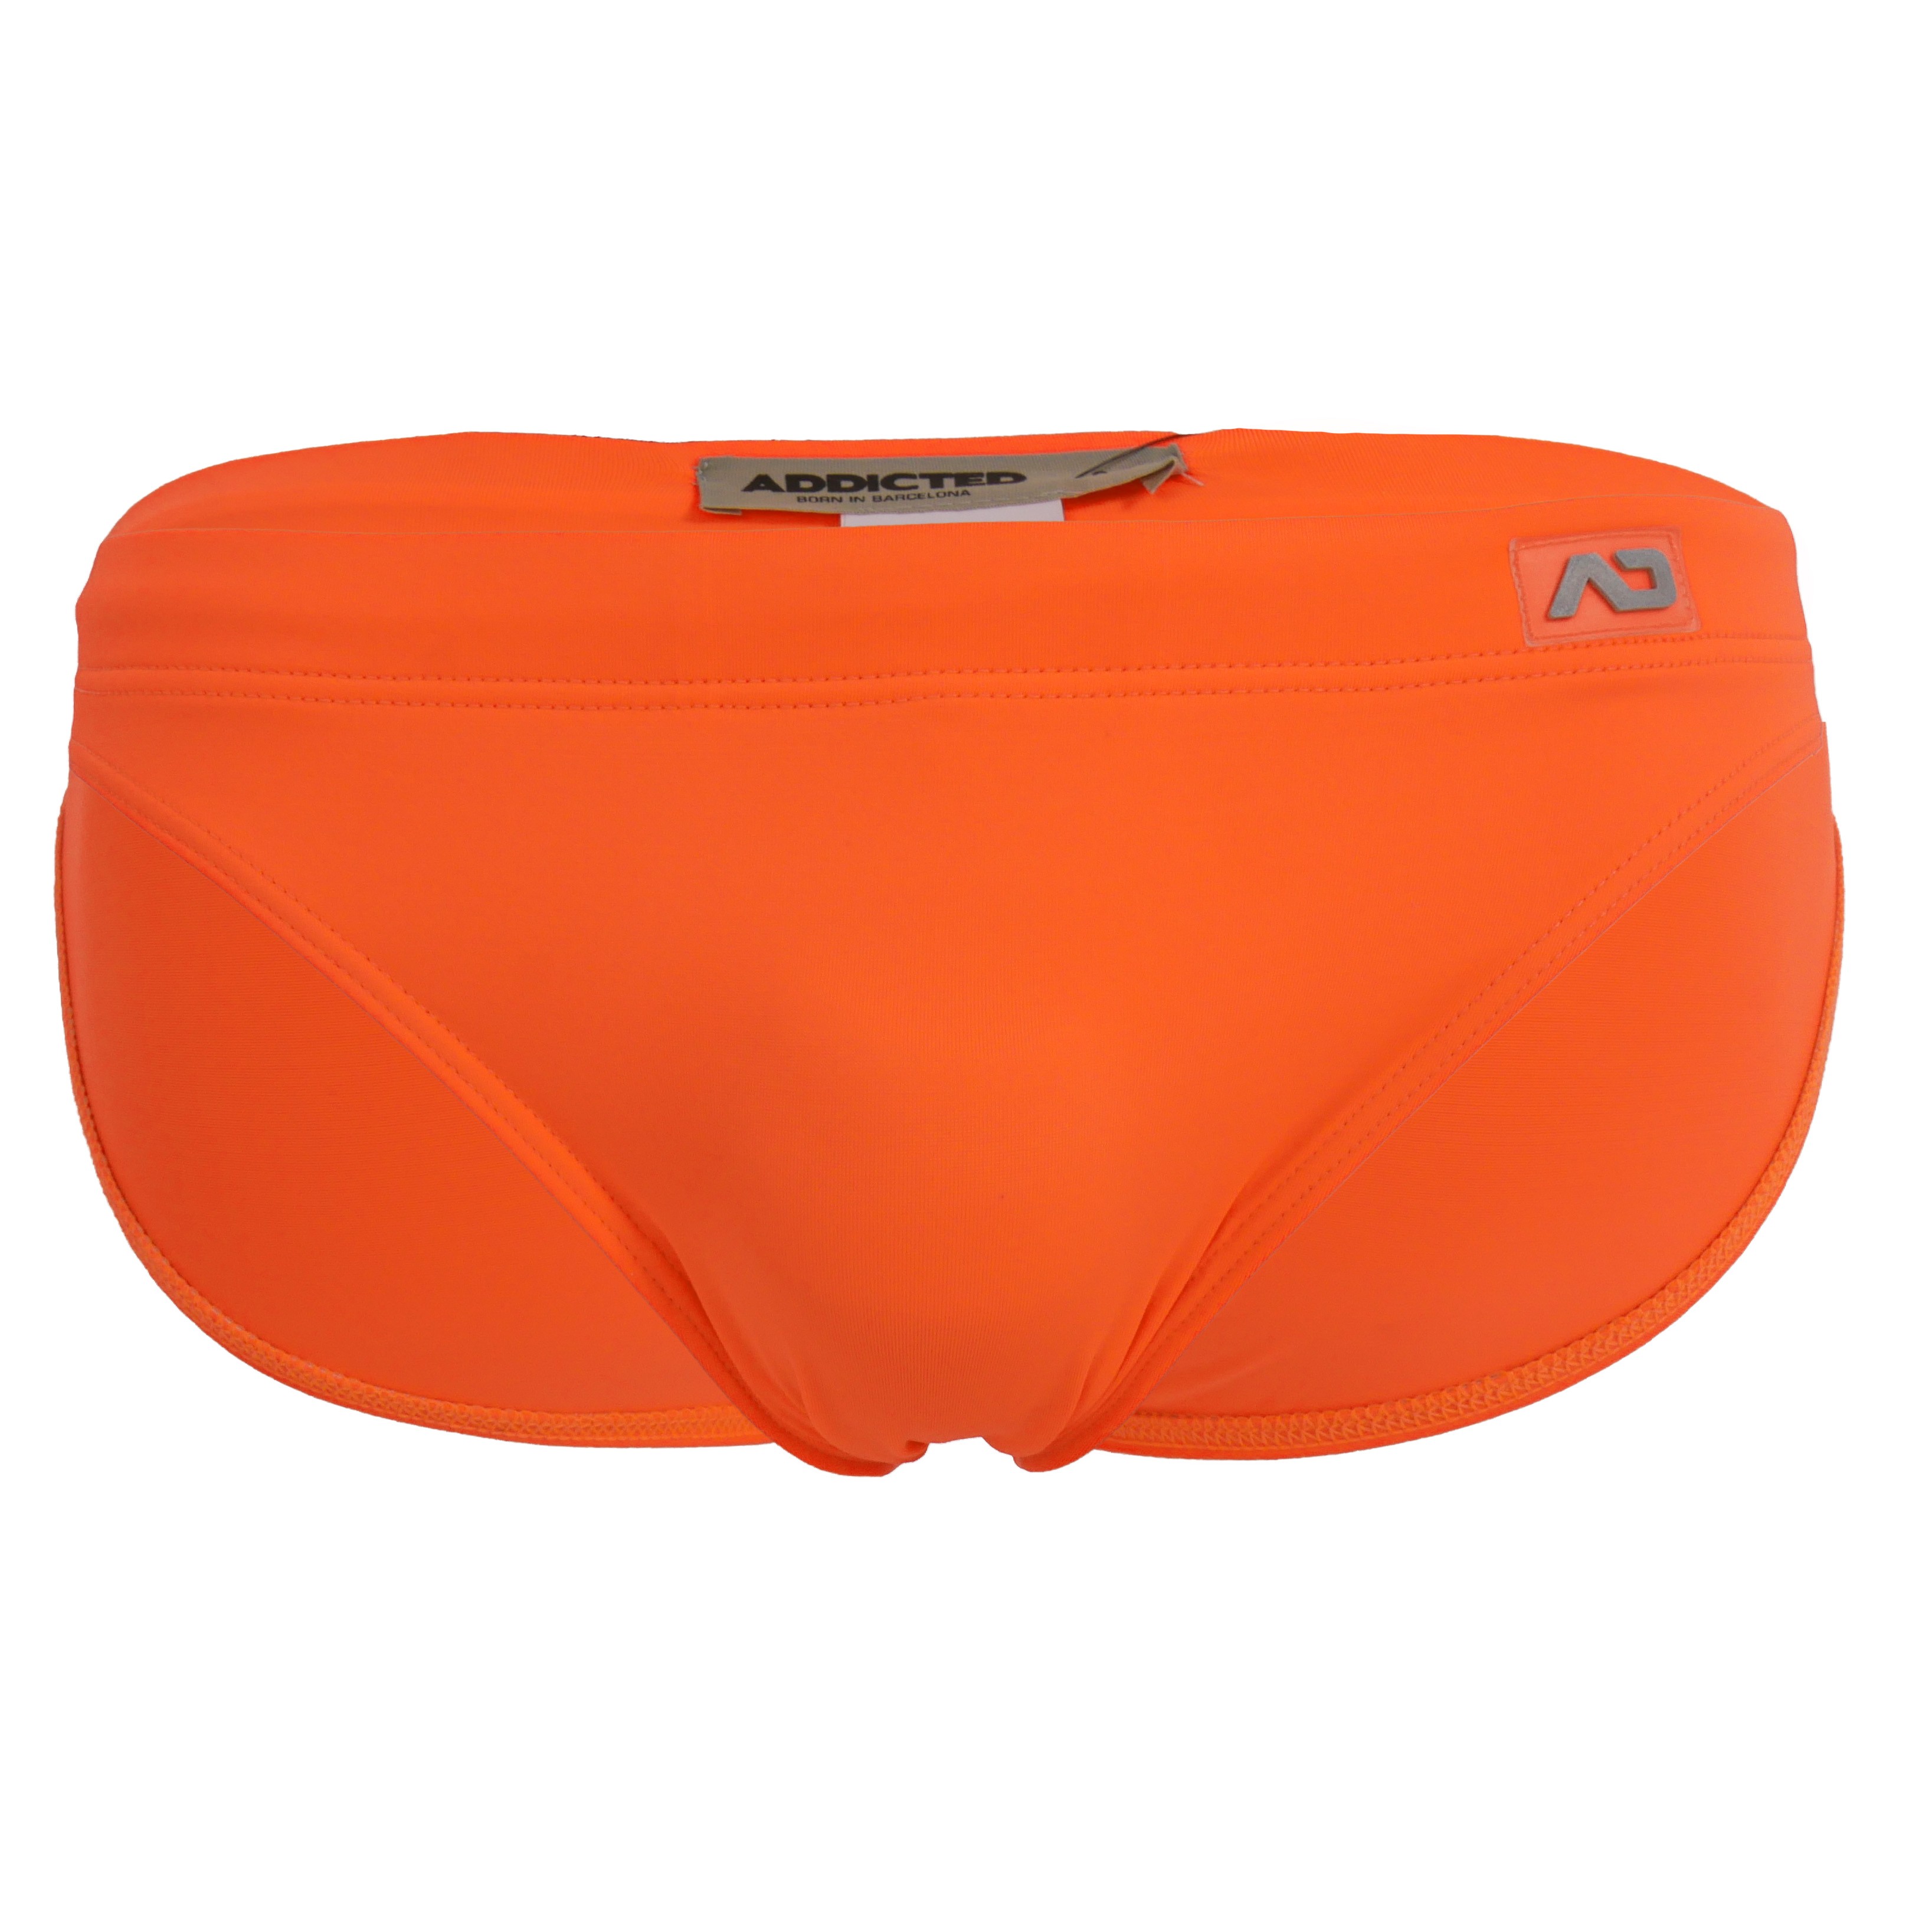 Mini Neon - orange swimsuit: Swim Briefs for man brand ADDICTED for...